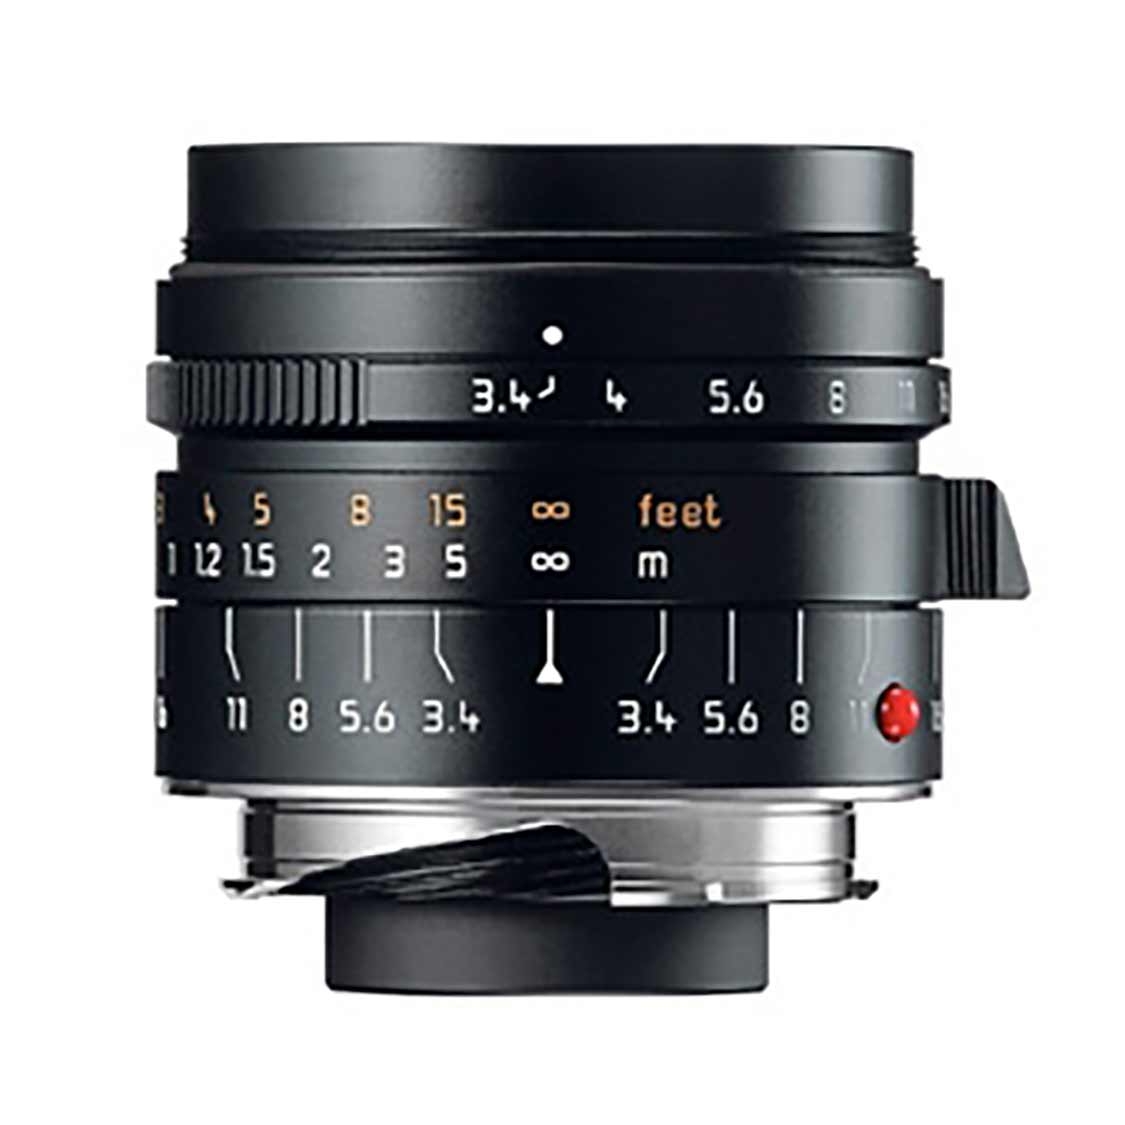 Leica Super-Elmar-M 21mm F3.4 Aspherical Lens